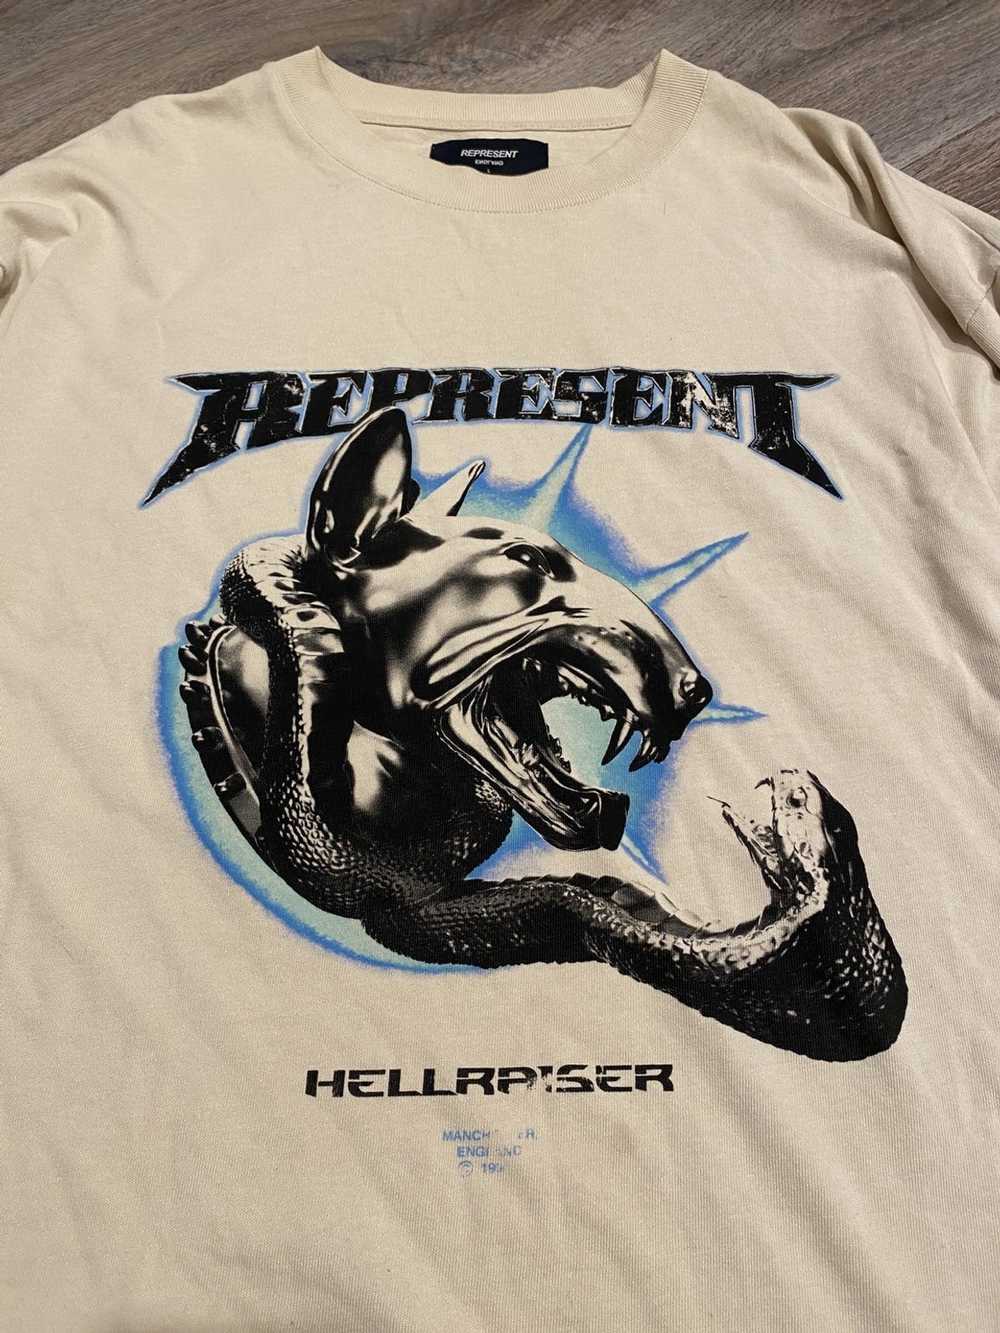 Represent Clo. Represent “Hellraiser” Tee - image 2